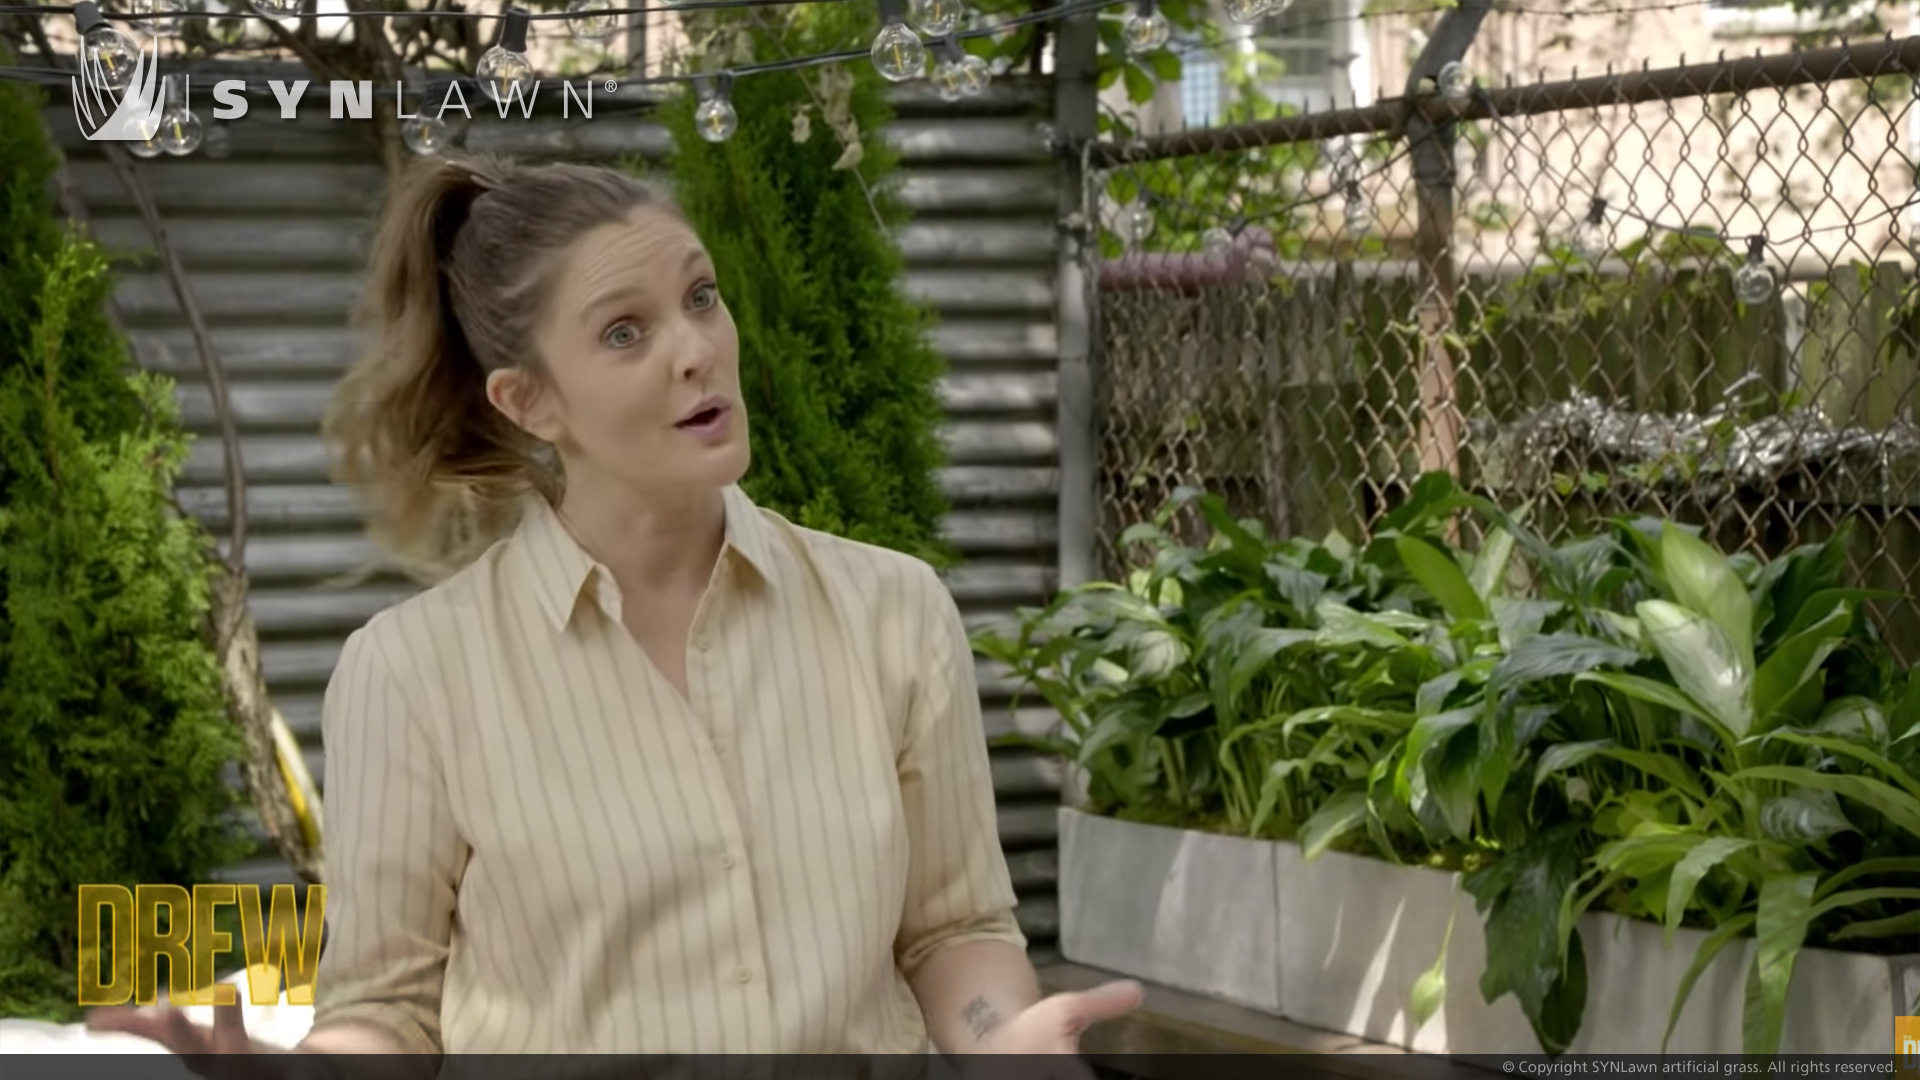 SYNLawn NY dona il restyling del cortile al Drew Barrymore Show